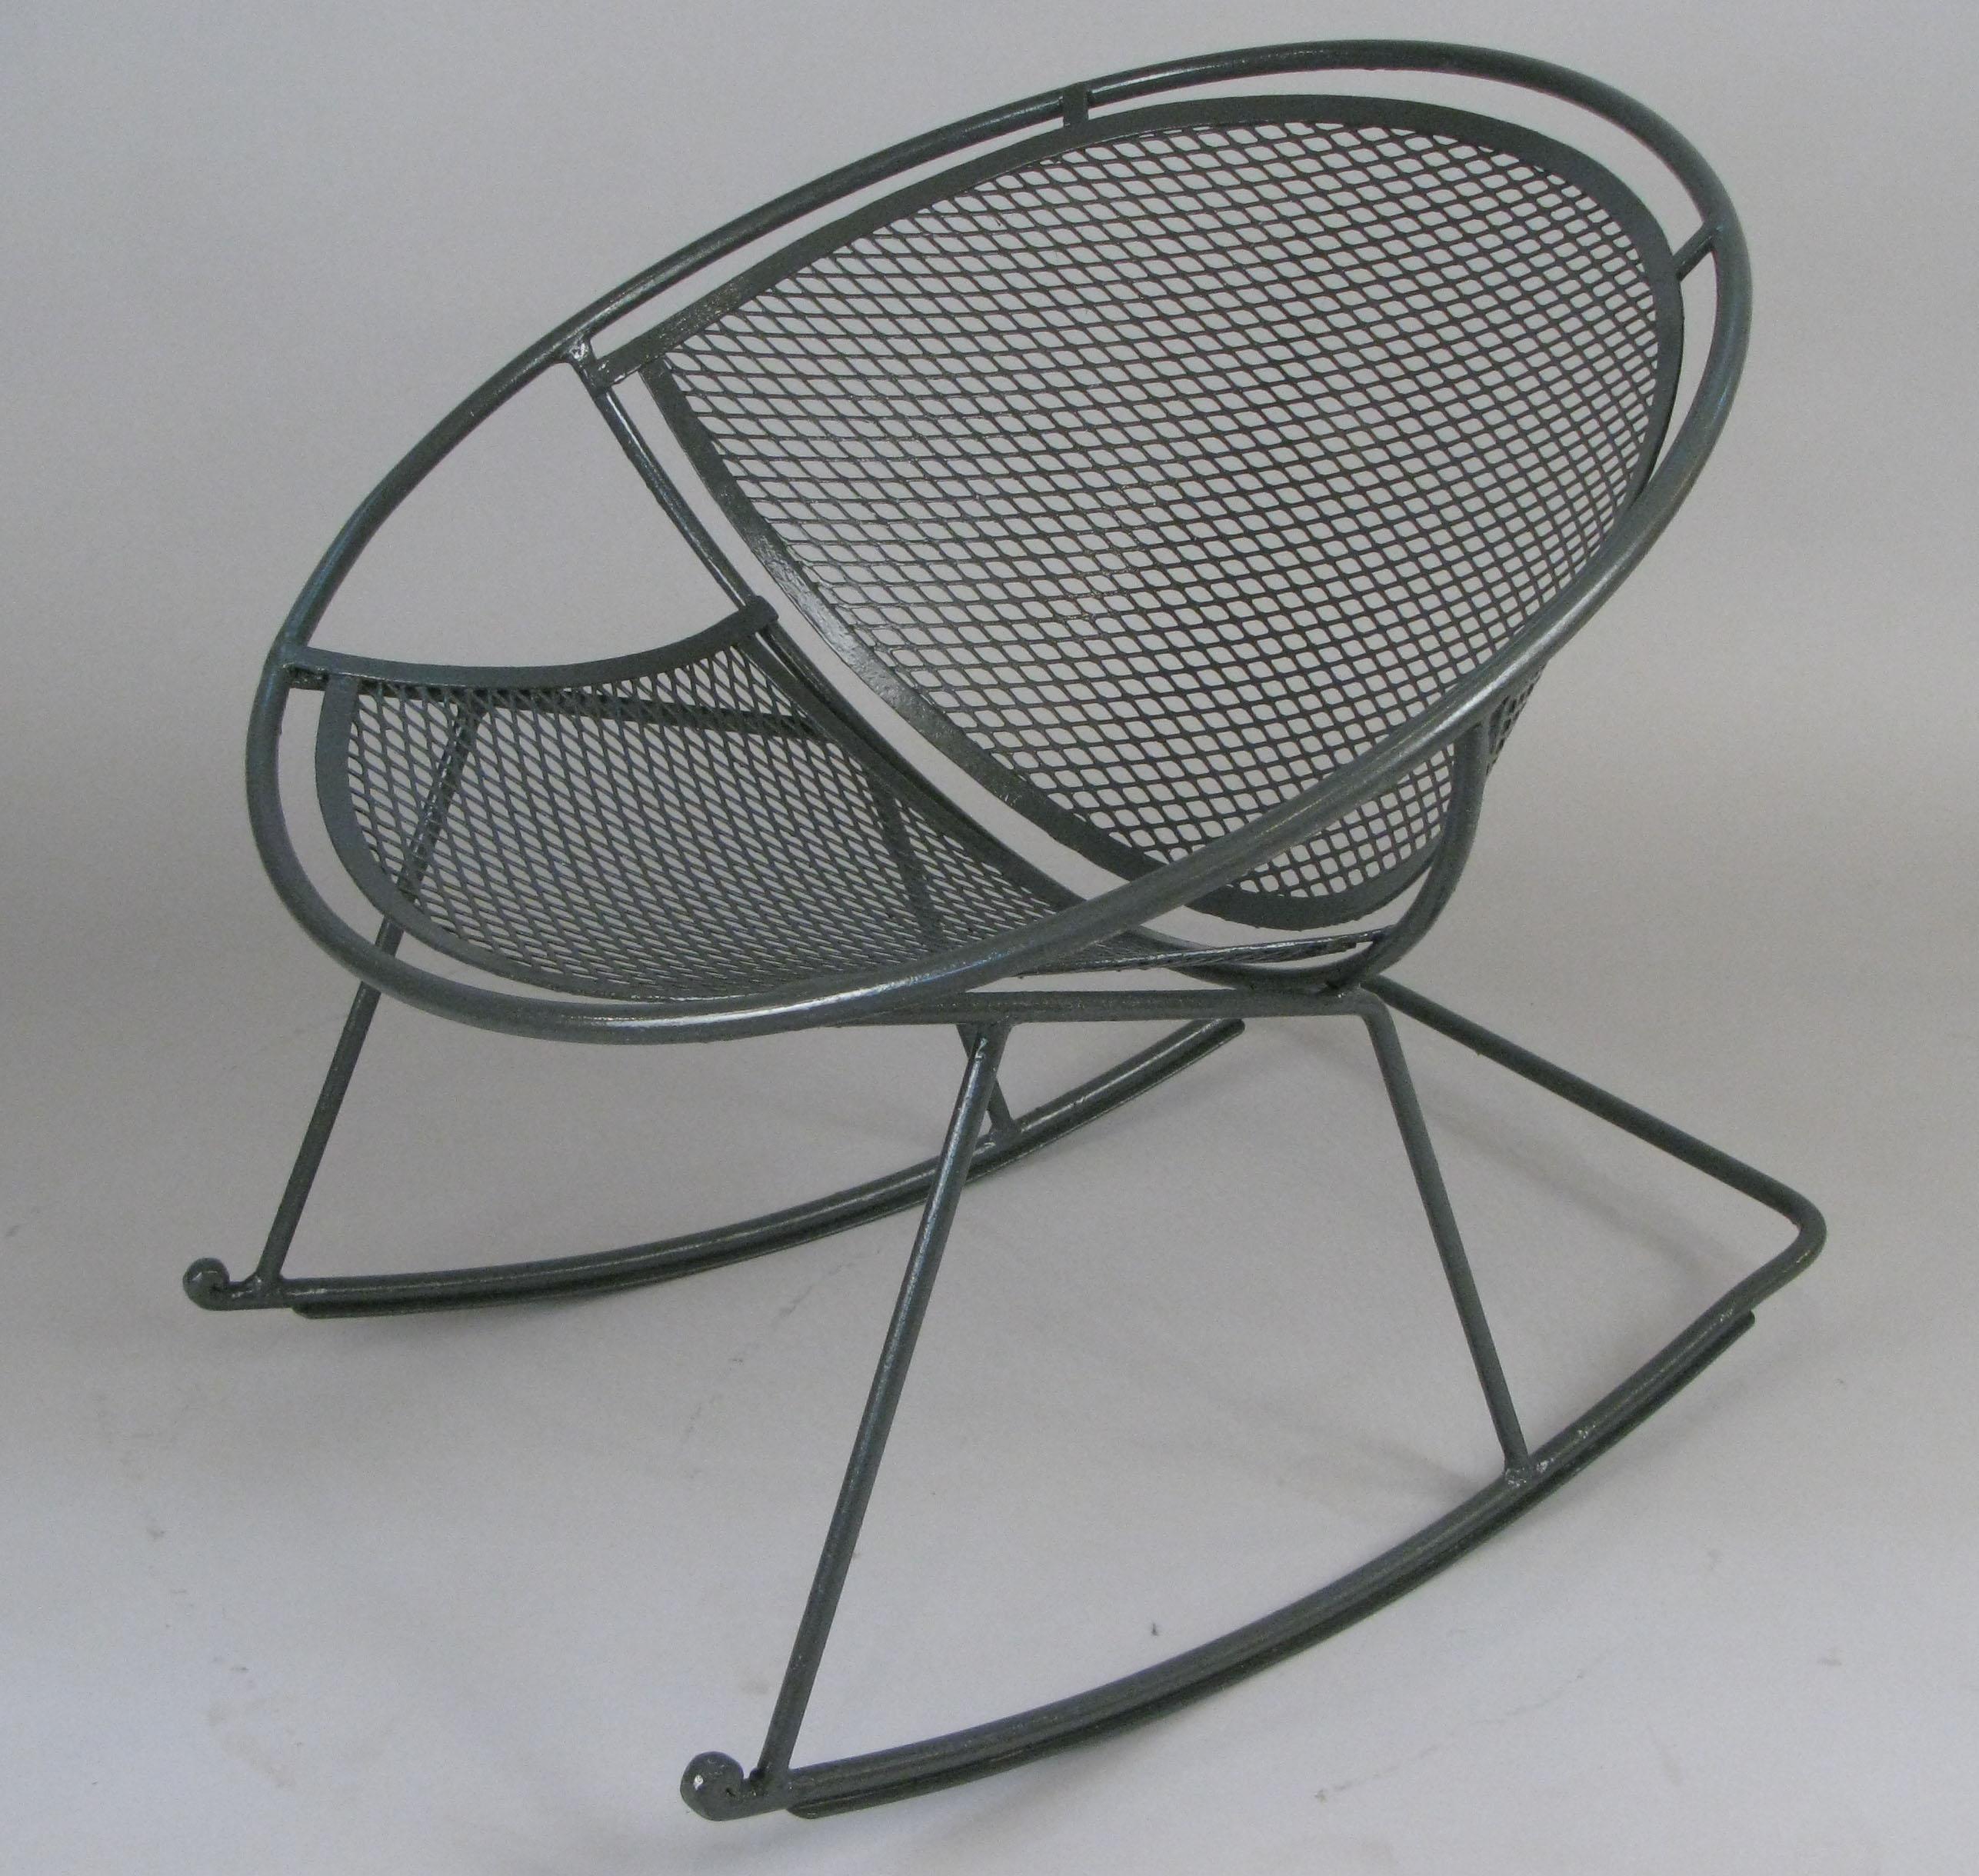 salterini rocking chair